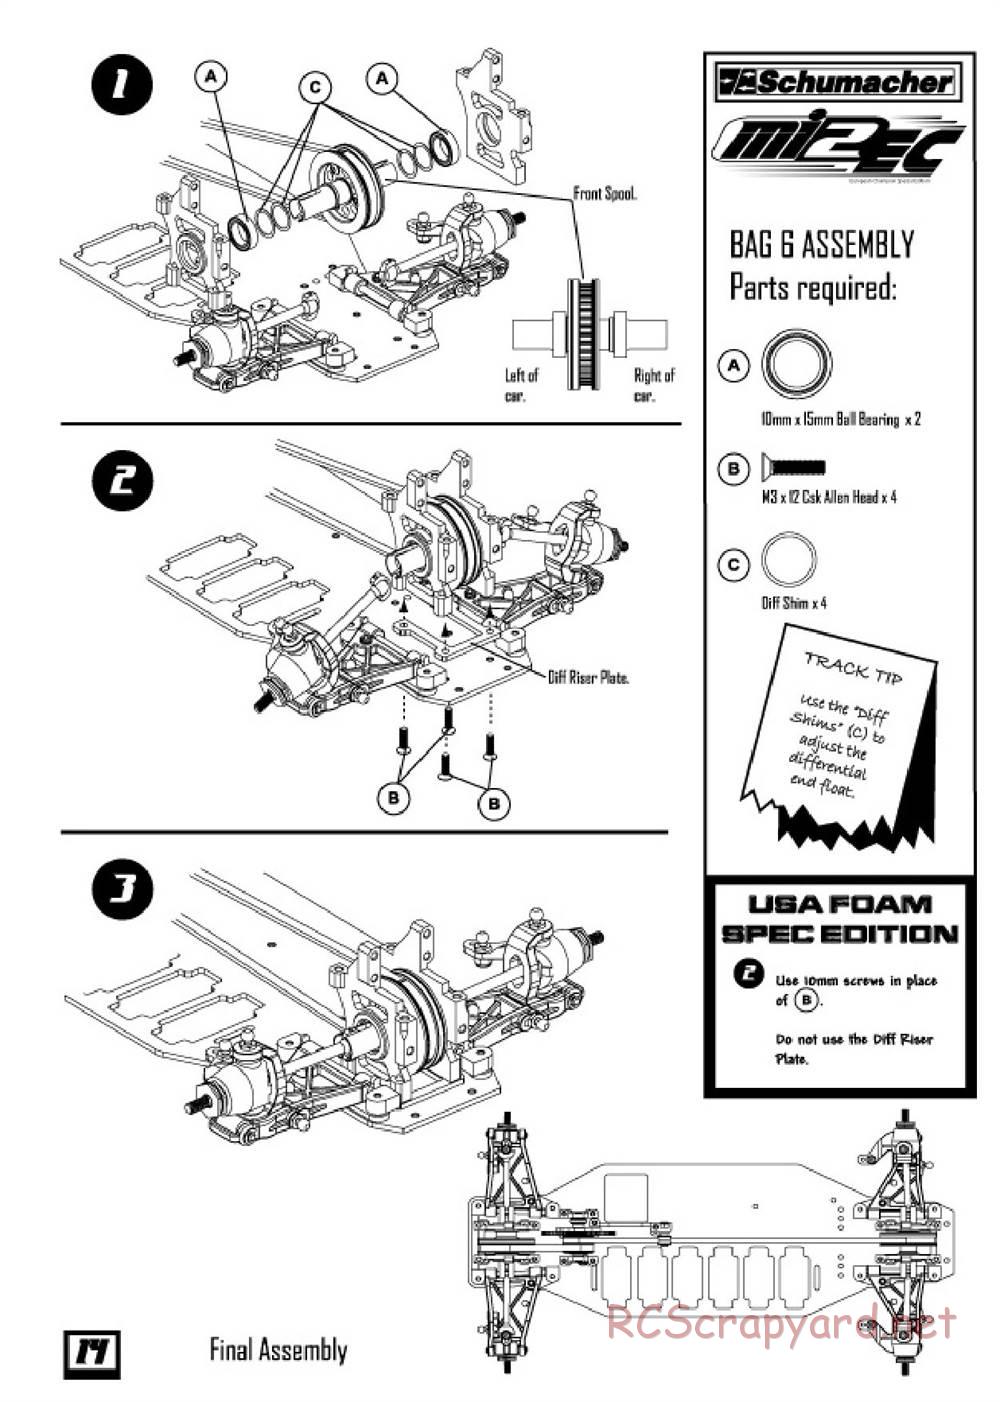 Schumacher - Mi2 EC - Manual - Page 16